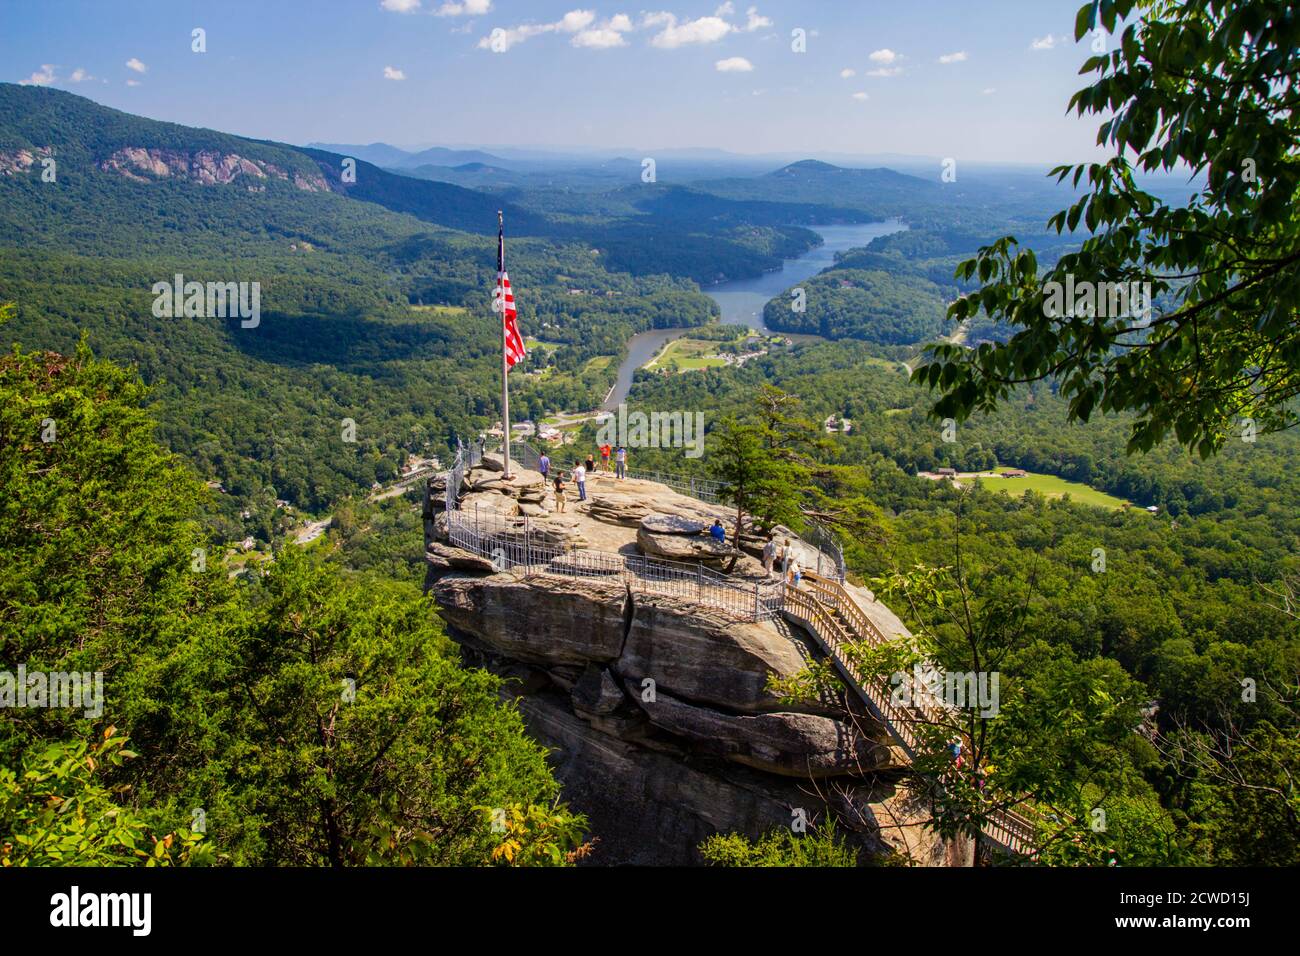 Lake Lure, North Carolina, USA - September 21, 2014: The peak of Chimney Rock overlooking Lake Lure and the surrounding Appalachian Mountains. Stock Photo